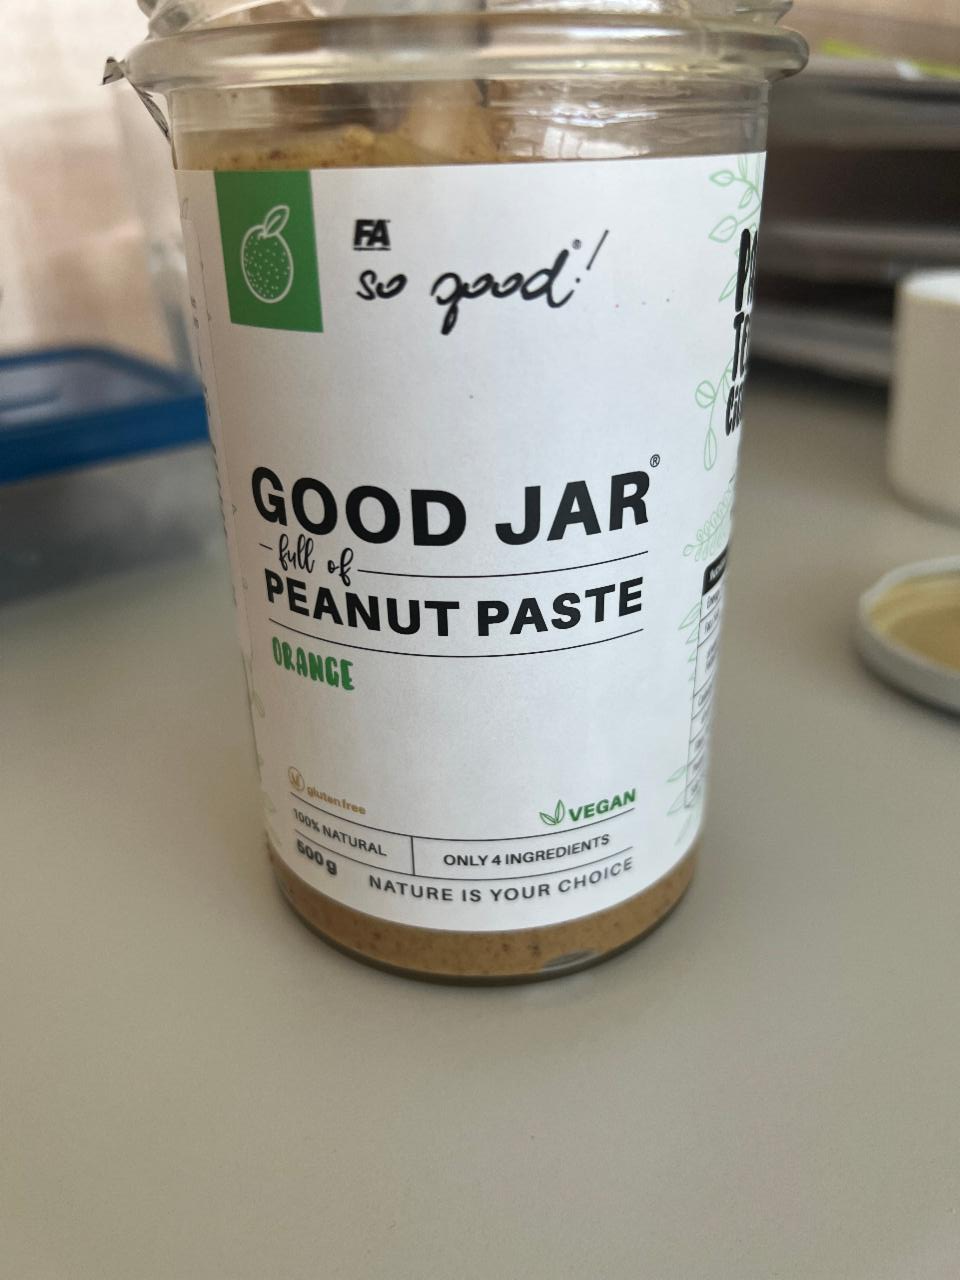 Fotografie - GOOD Jar full of Peanut Paste orange Fa so good!